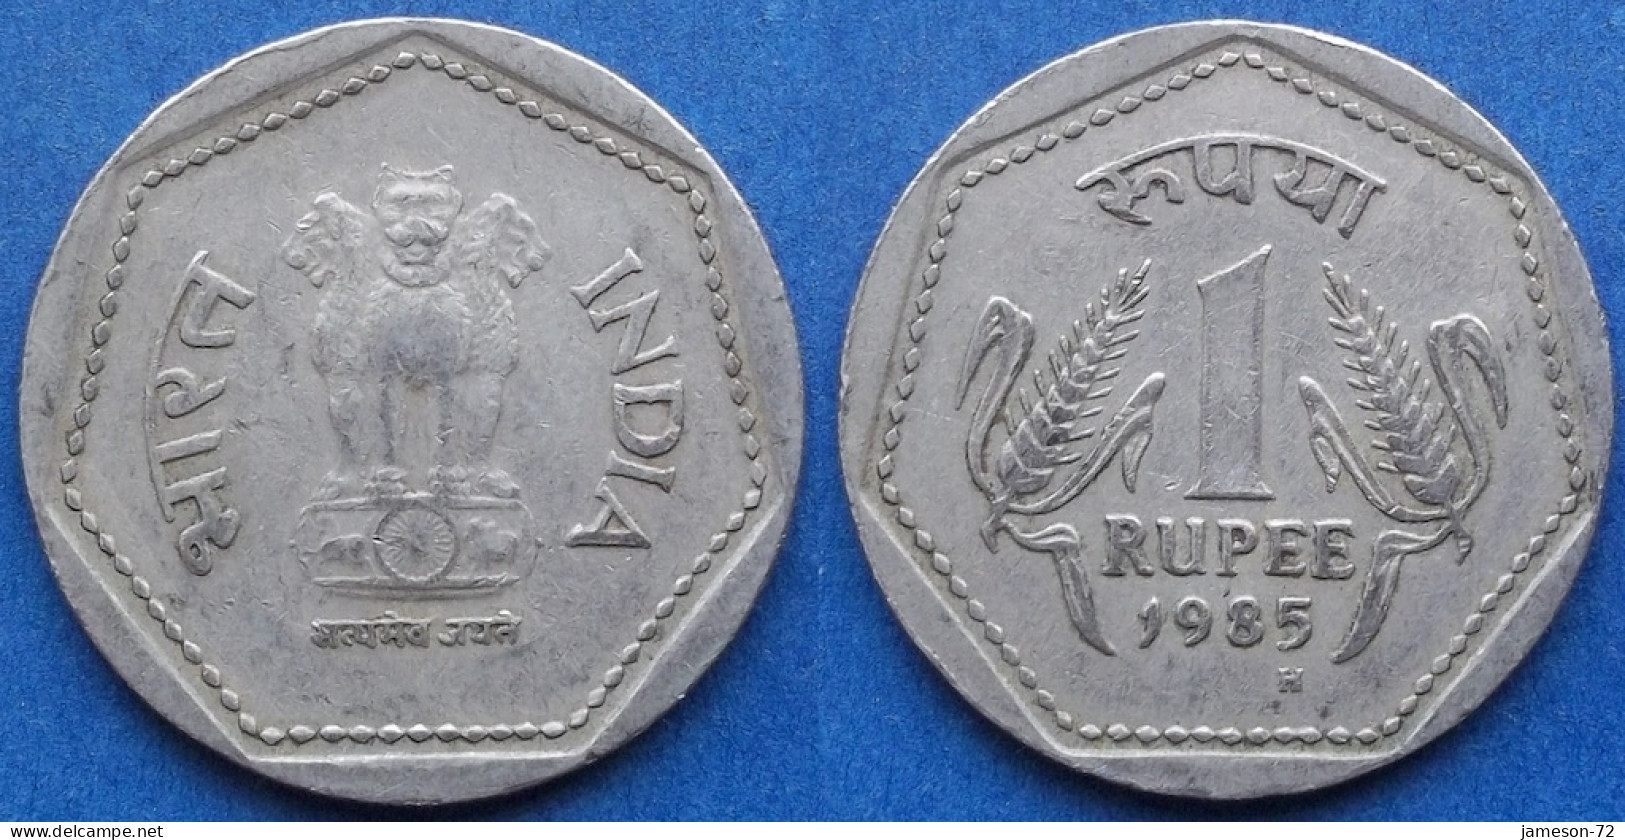 INDIA - 1 Rupee 1985 H "Grain Ears Flank" KM# 79.1 Republic Decimal Coinage (1957) - Edelweiss Coins - Georgië